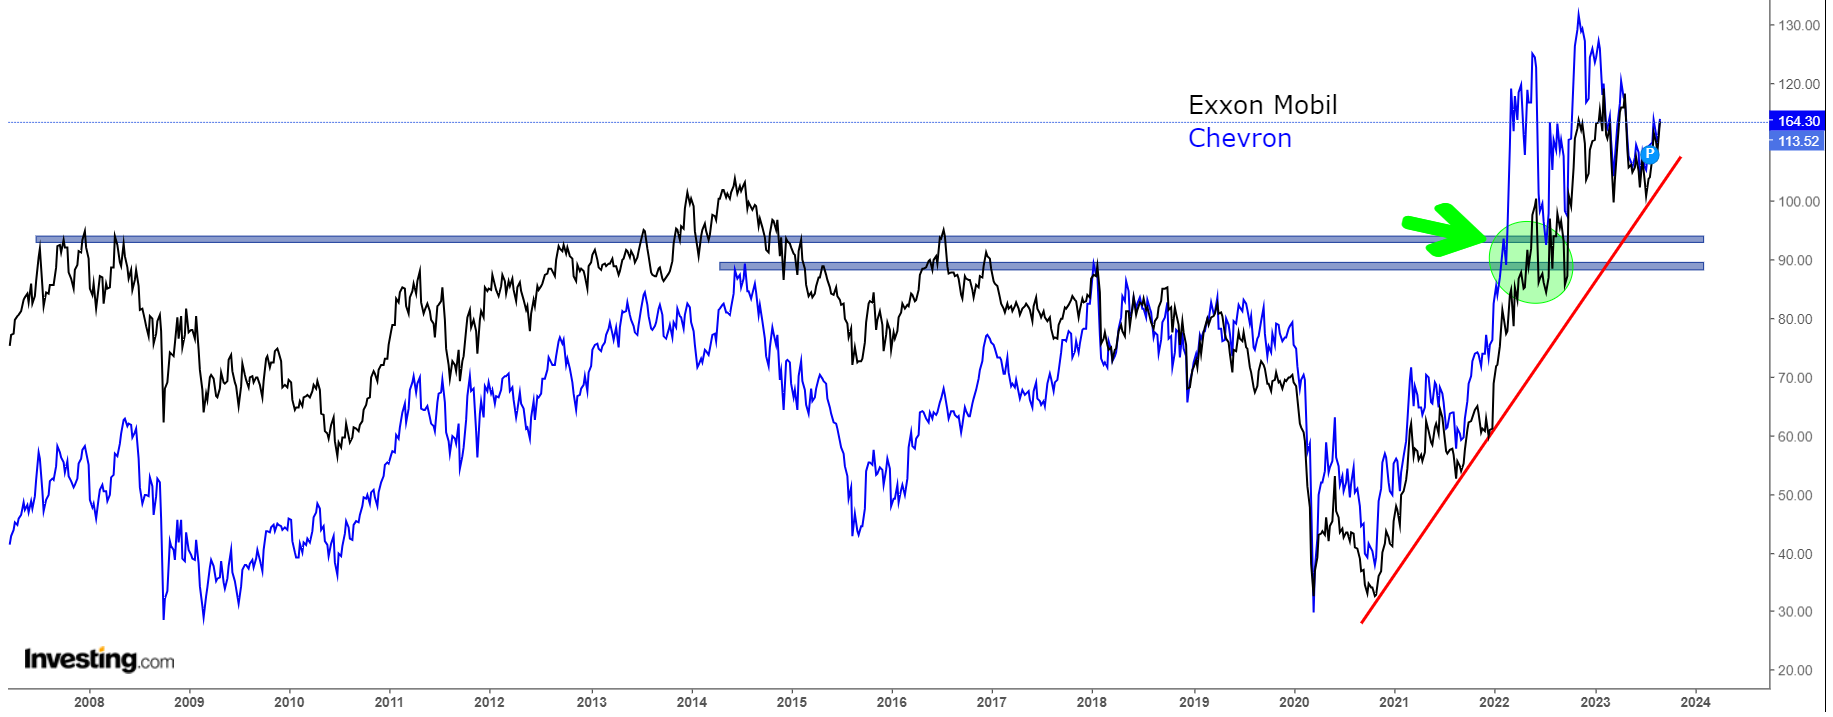 Exxon Mobil, Chevron Stock Charts